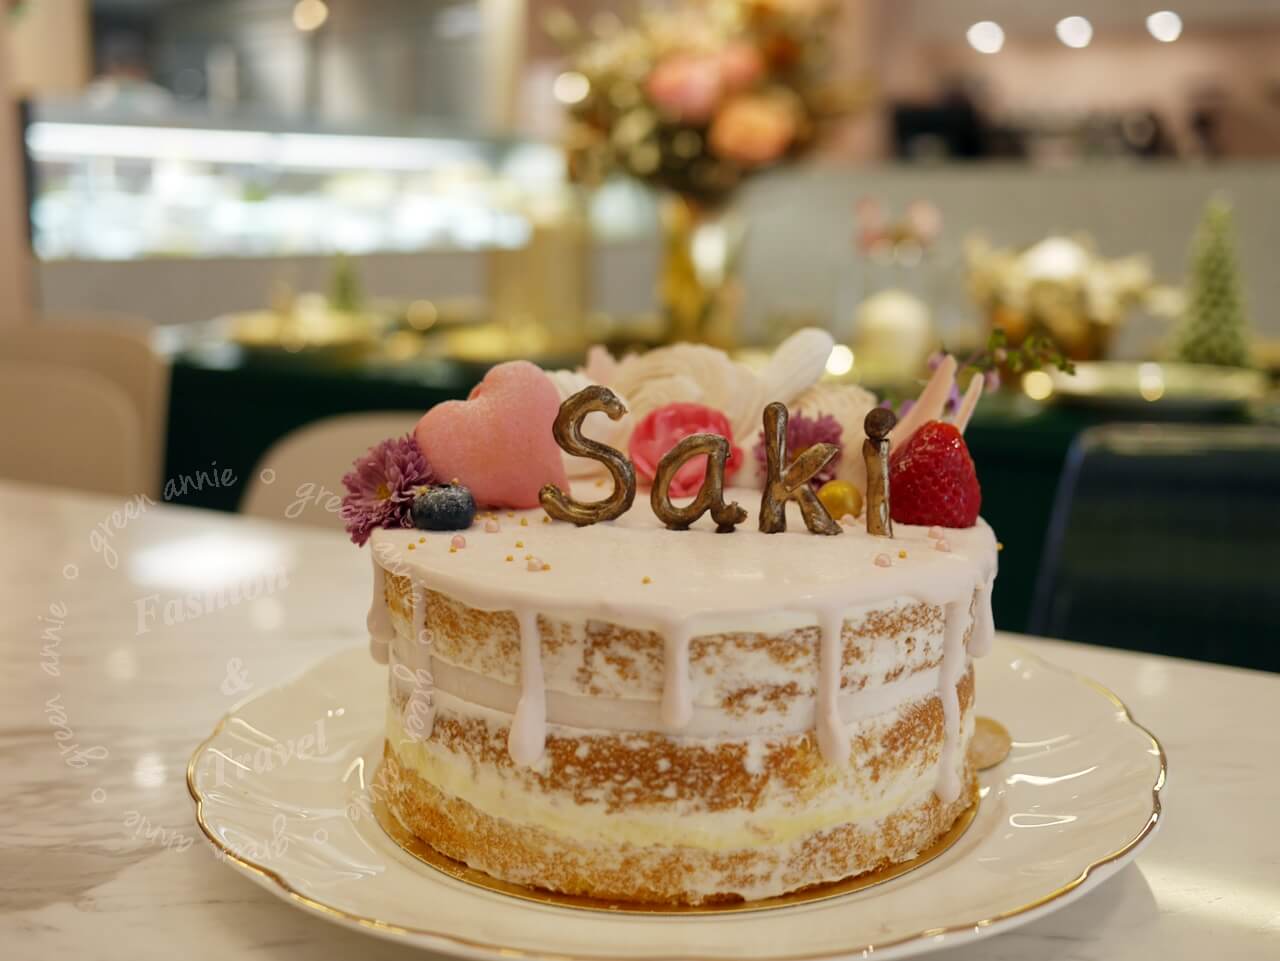 Cher Mouton 姆桐 花蛋糕